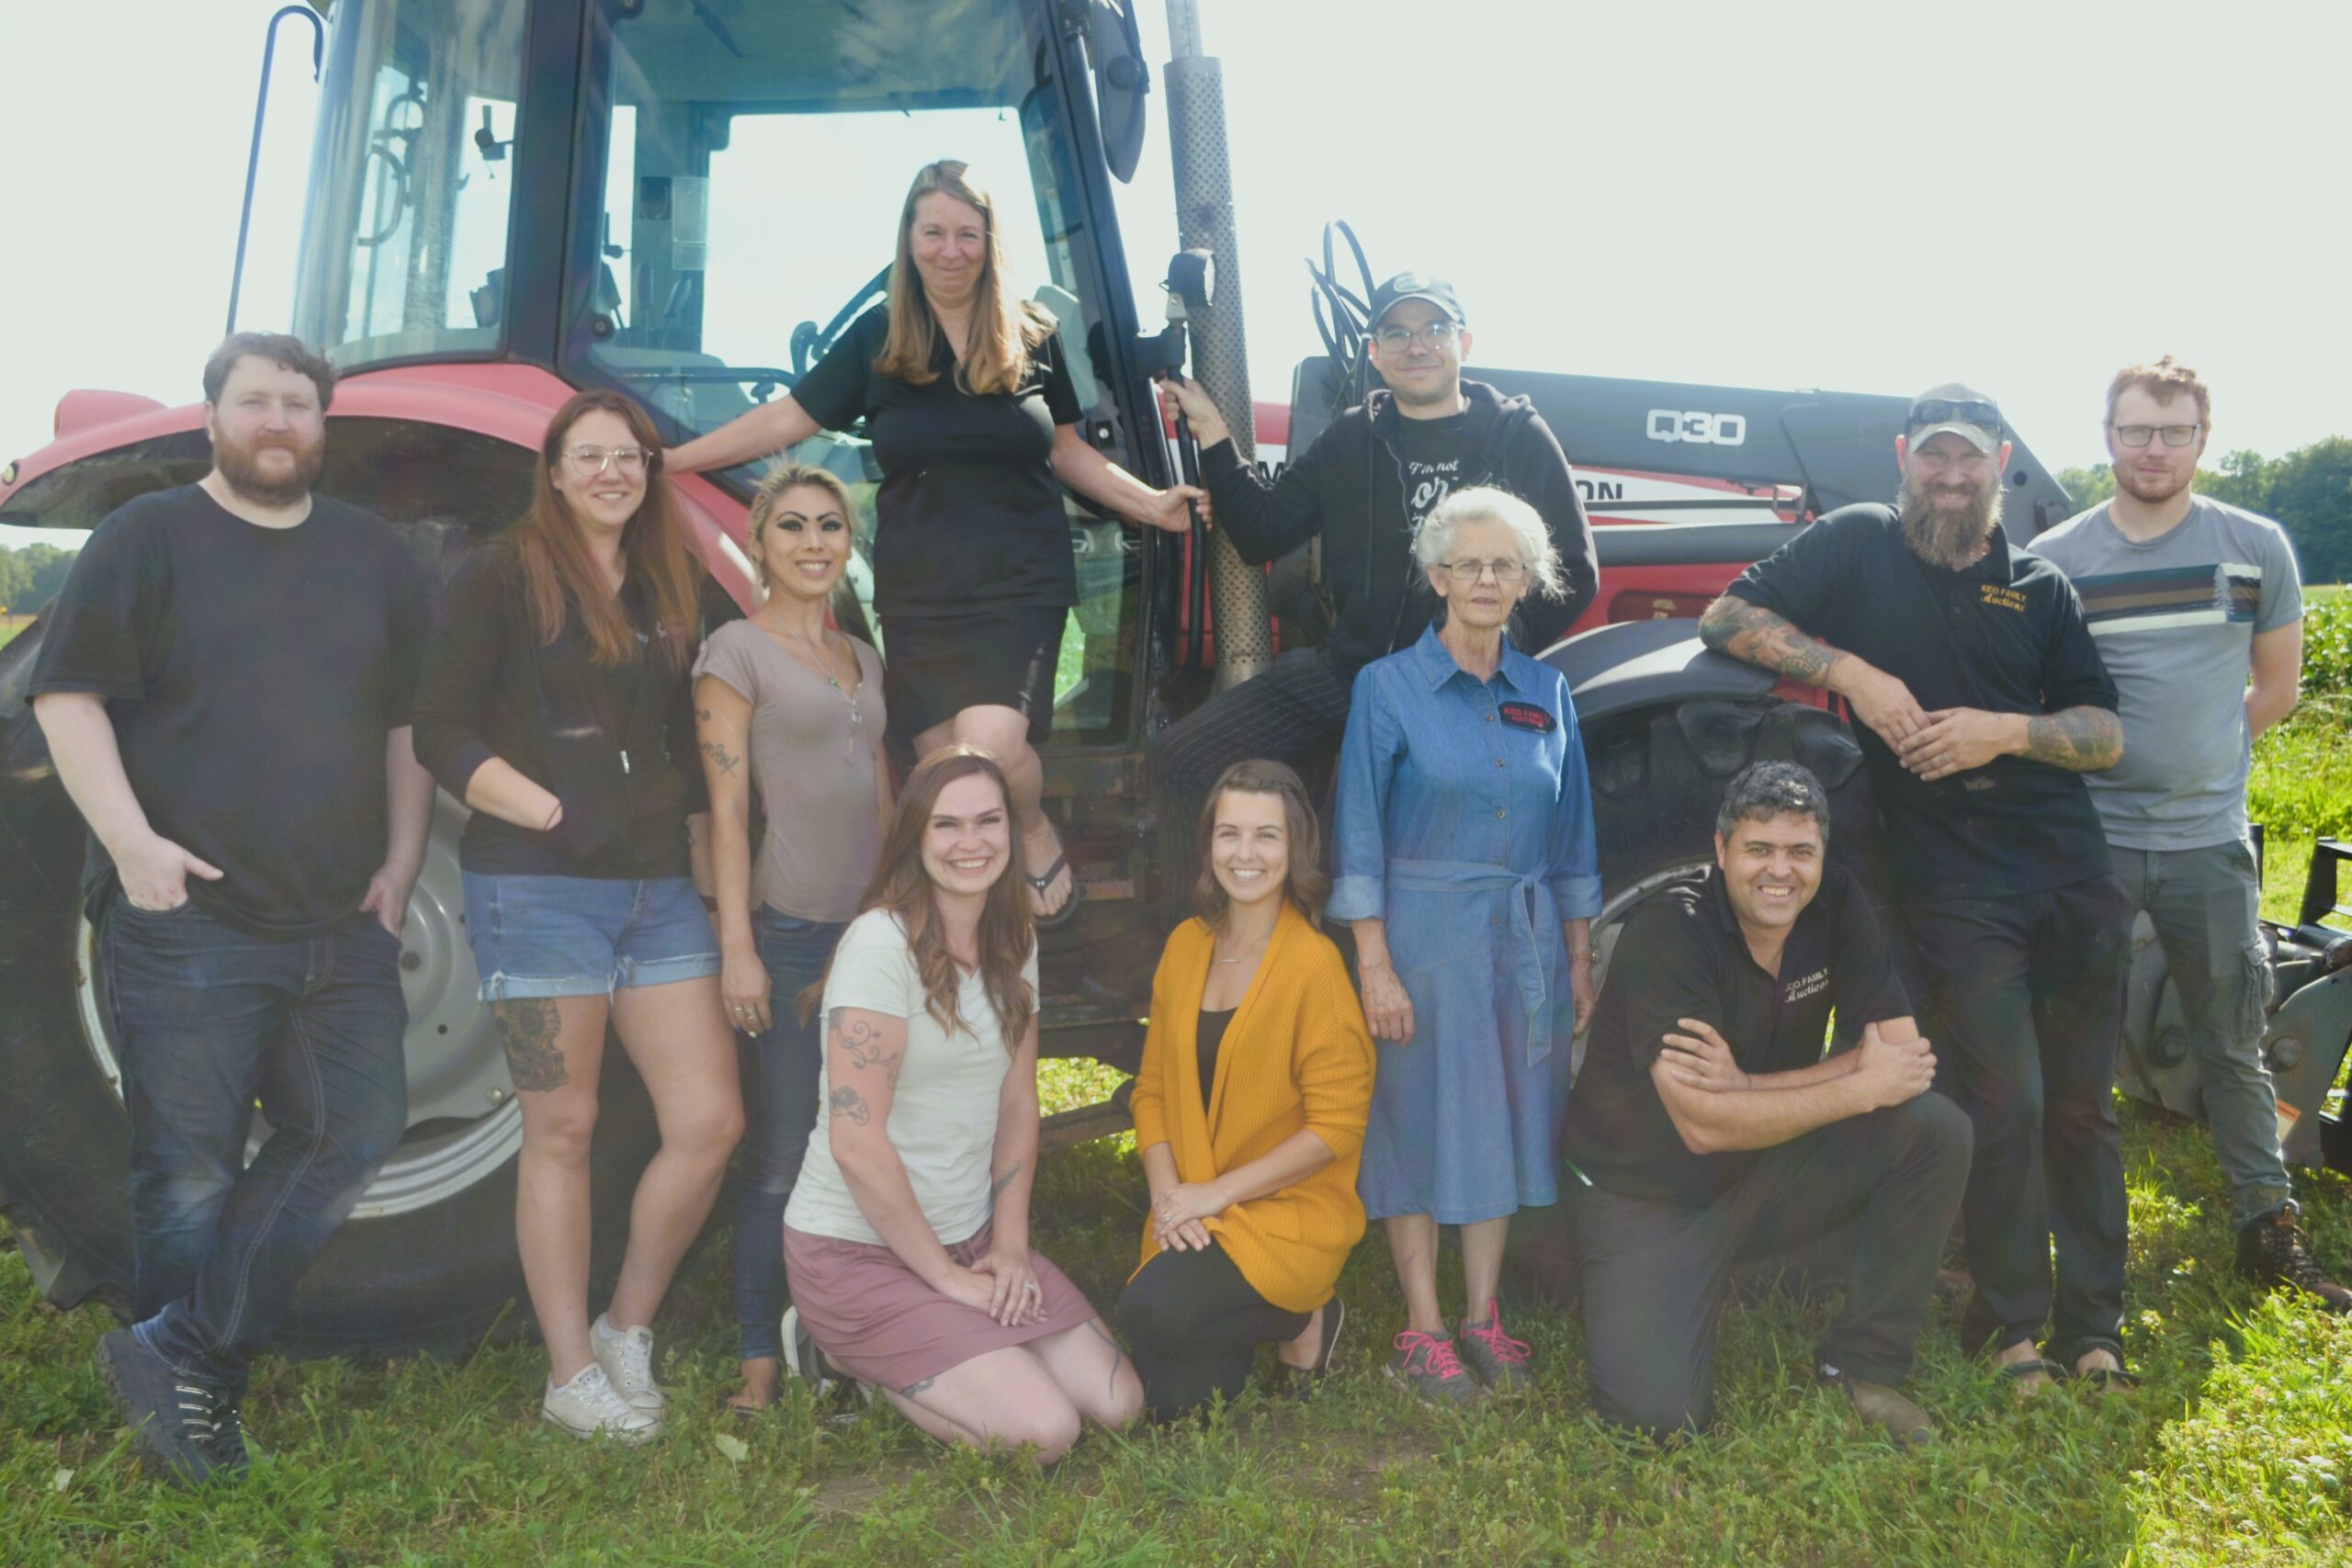 Staff photo with farming equipment